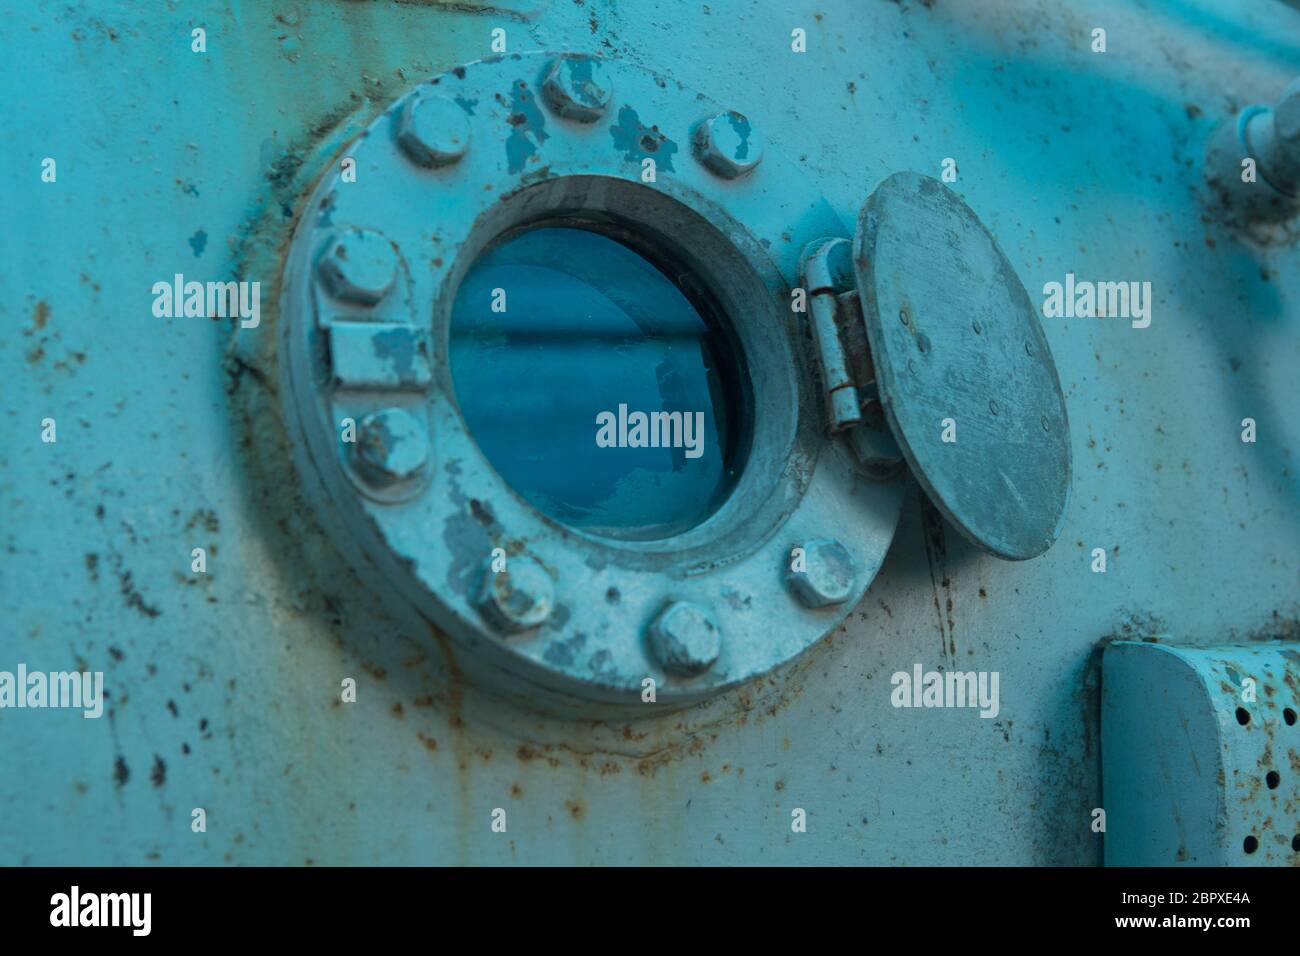 Batíscafo fotografías e imágenes de alta resolución - Alamy